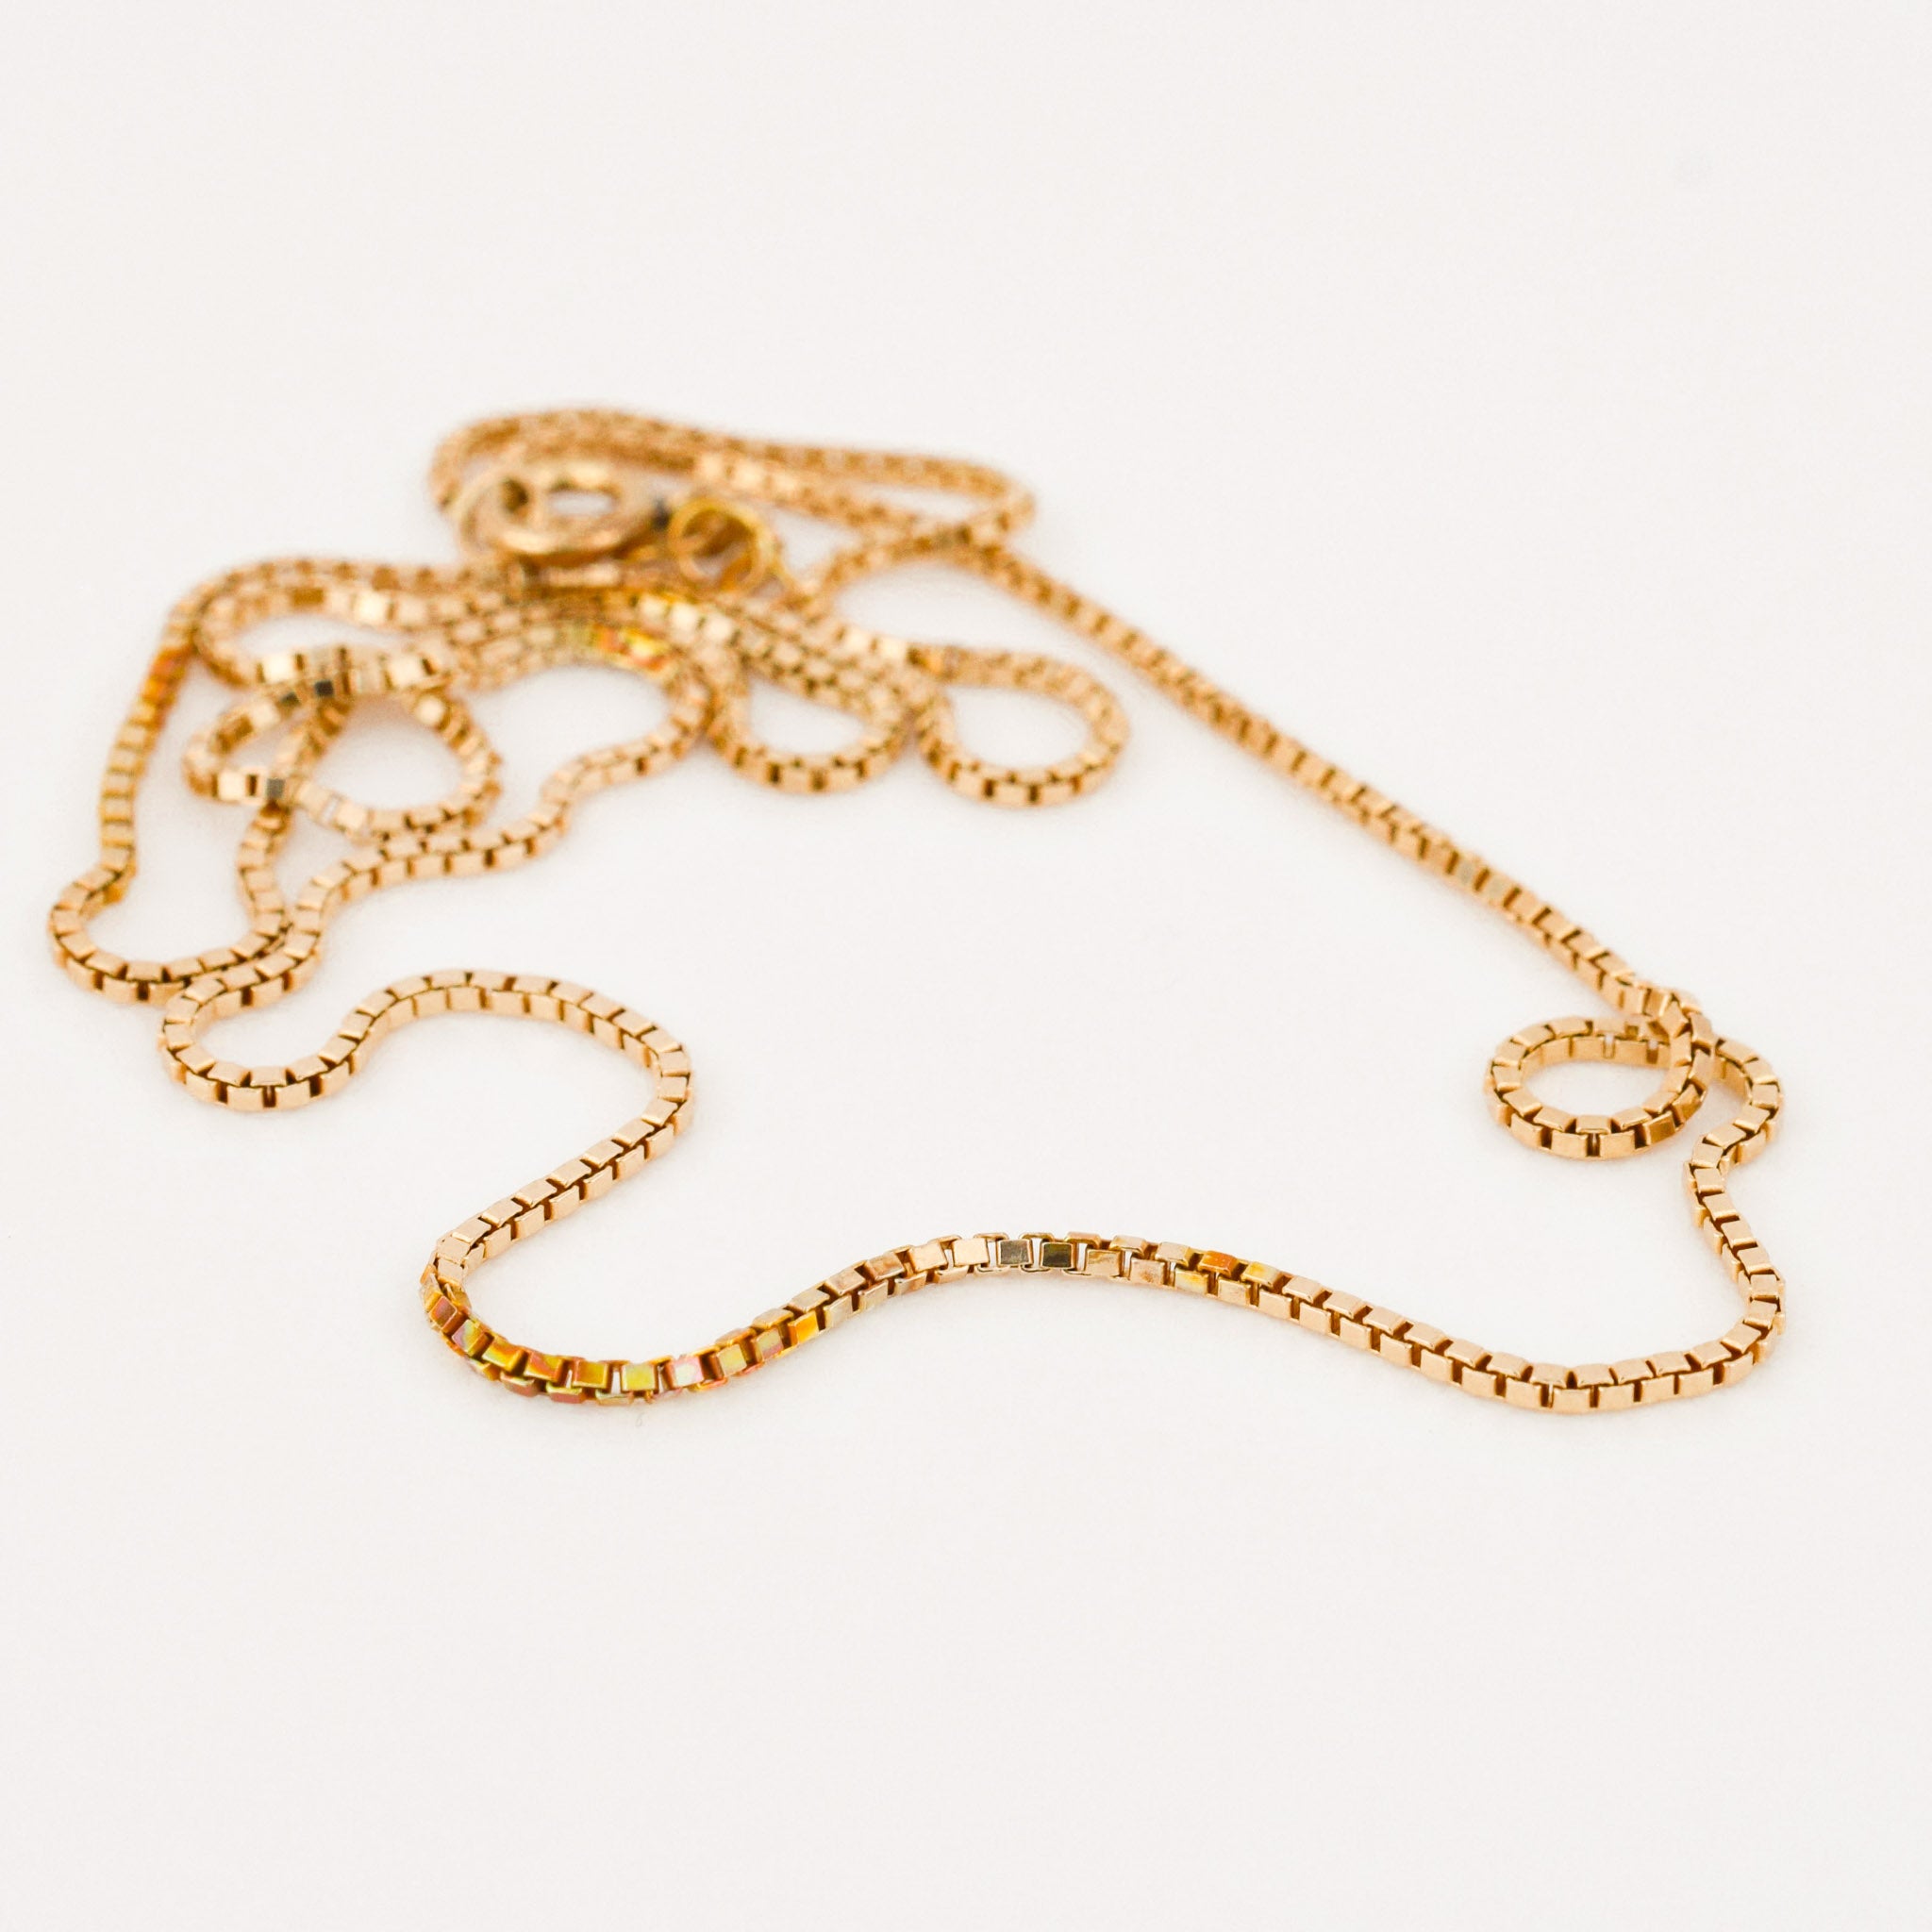 vintage gold box chain necklace